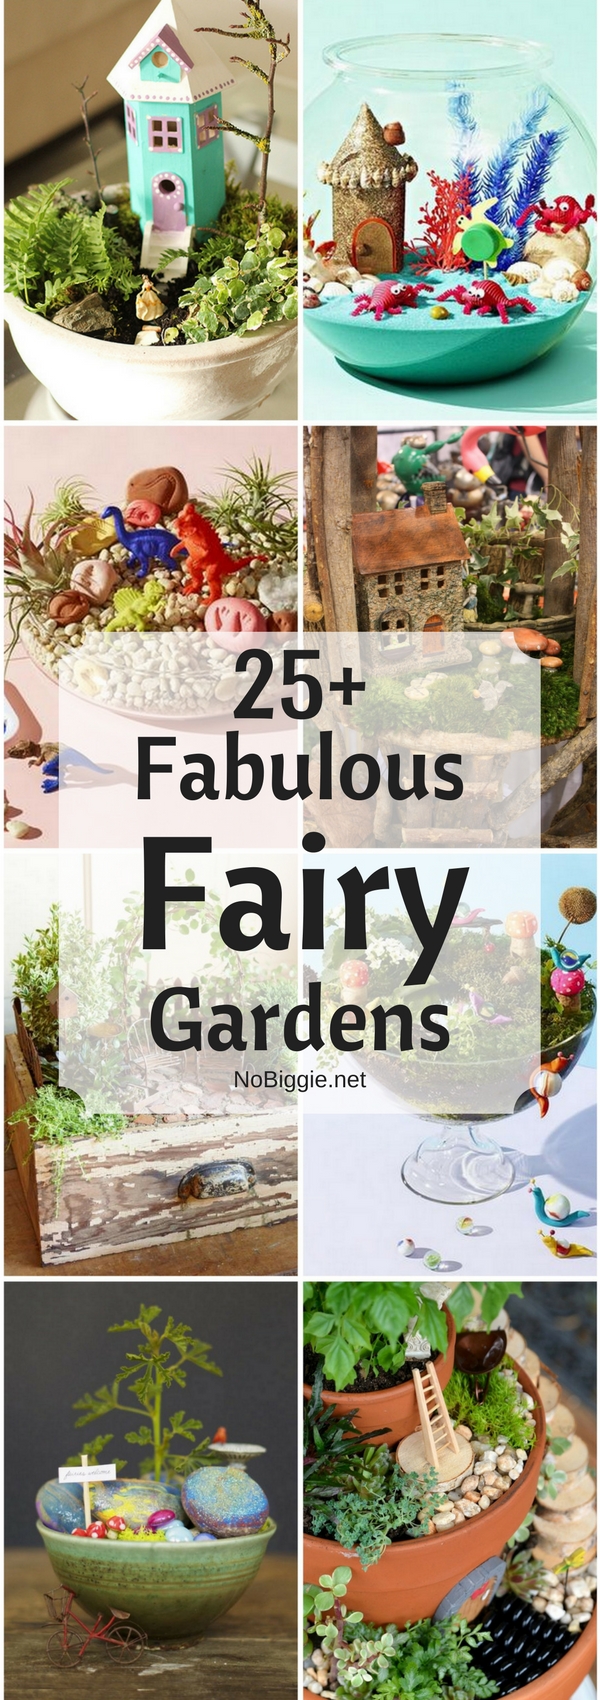 25+ Fabulous Fairy Gardens | NoBiggie.net